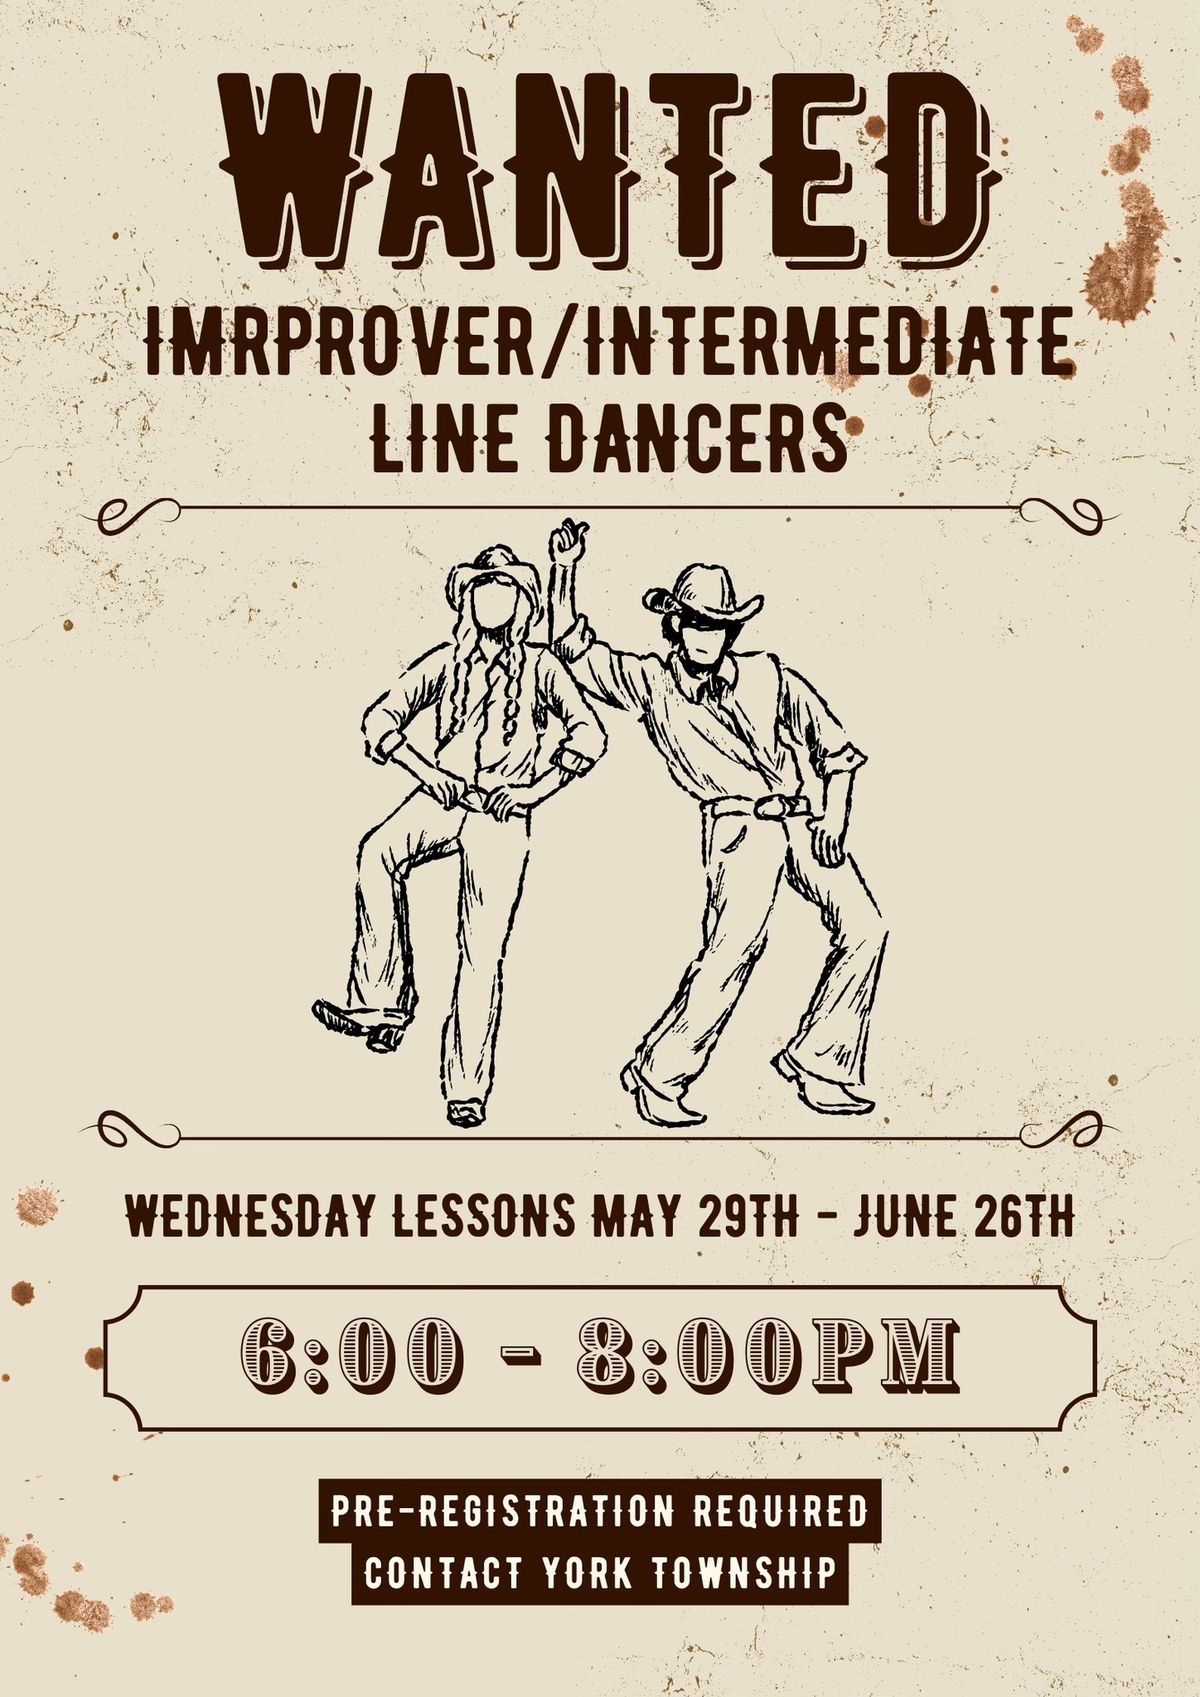 York Township Improver\/Intermediate Line Dance Workshop